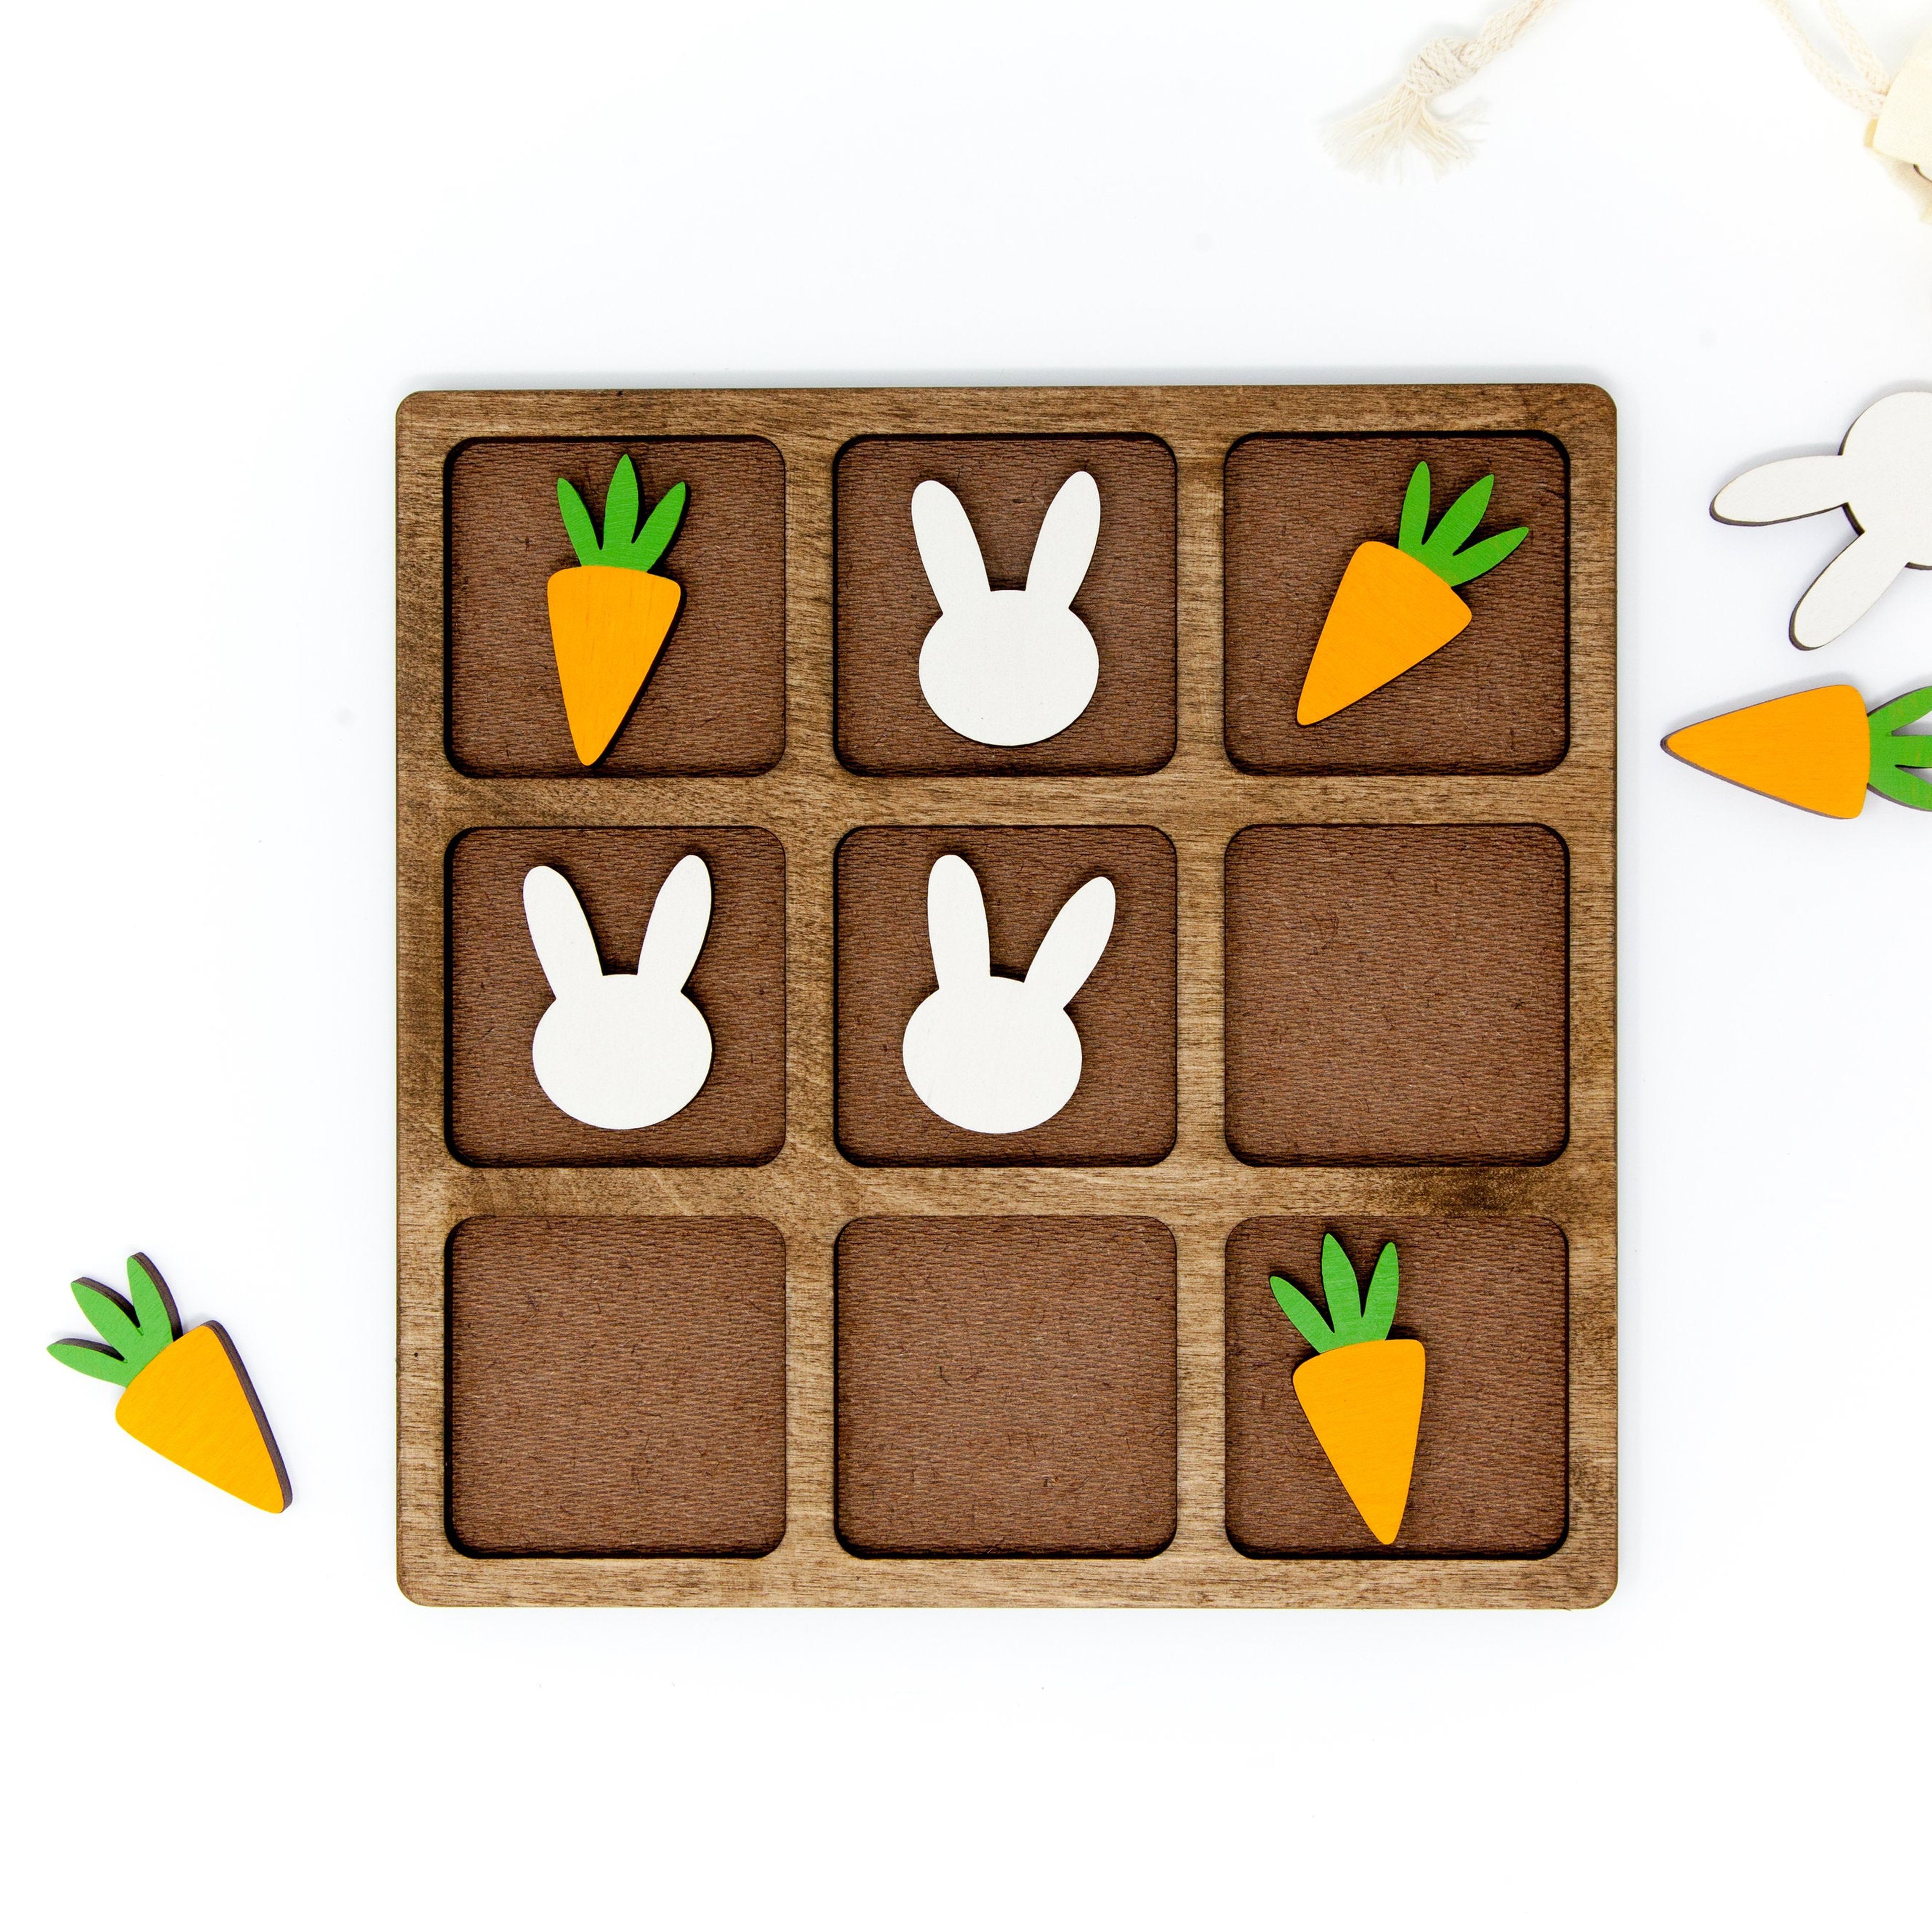 Bunny vs. Carrot Tic-Tac-Toe